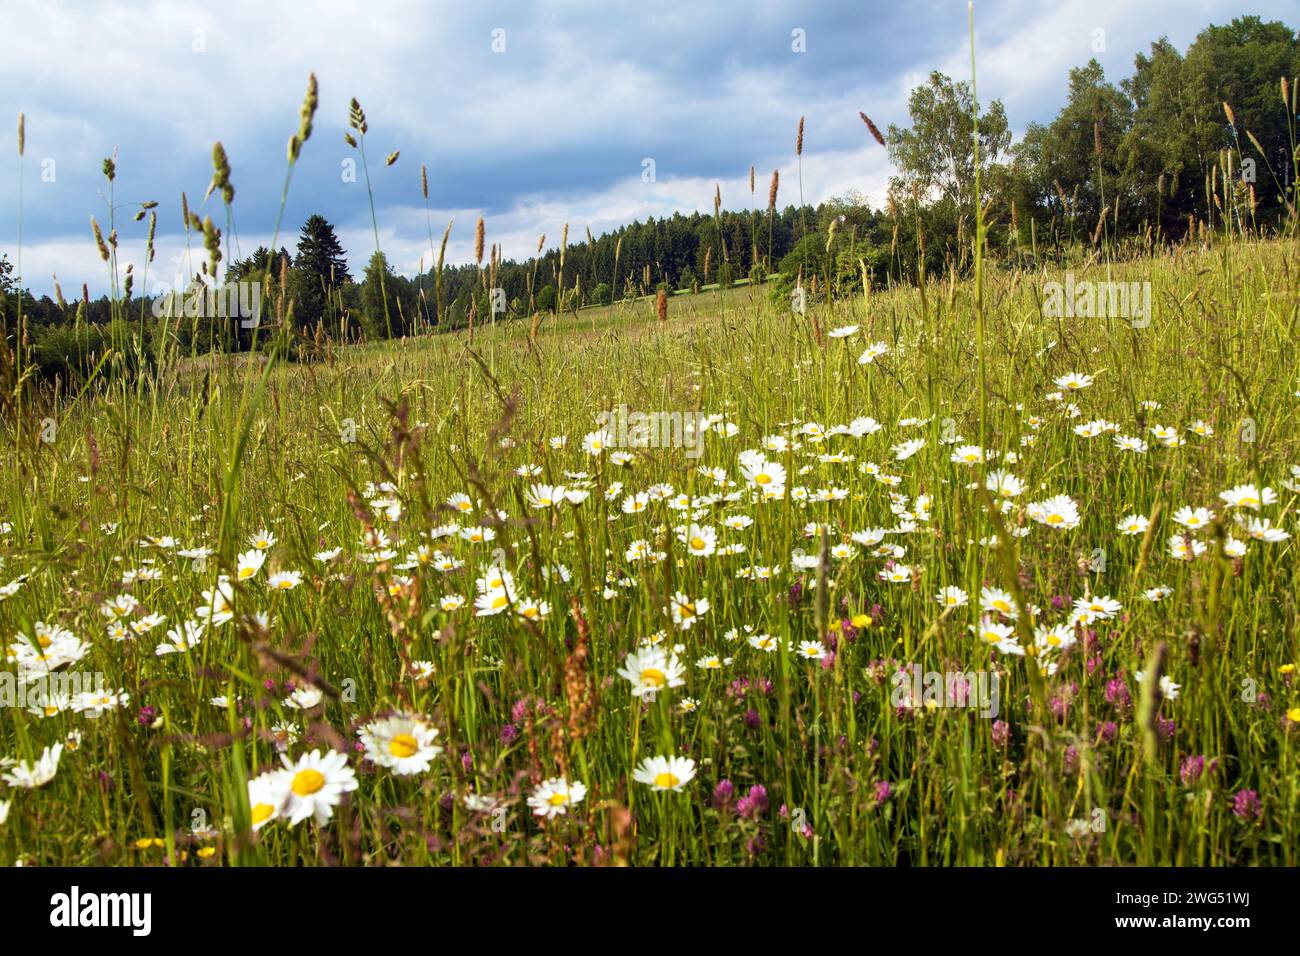 daisy on meadow, common daisy in latin Bellis perennis Stock Photo